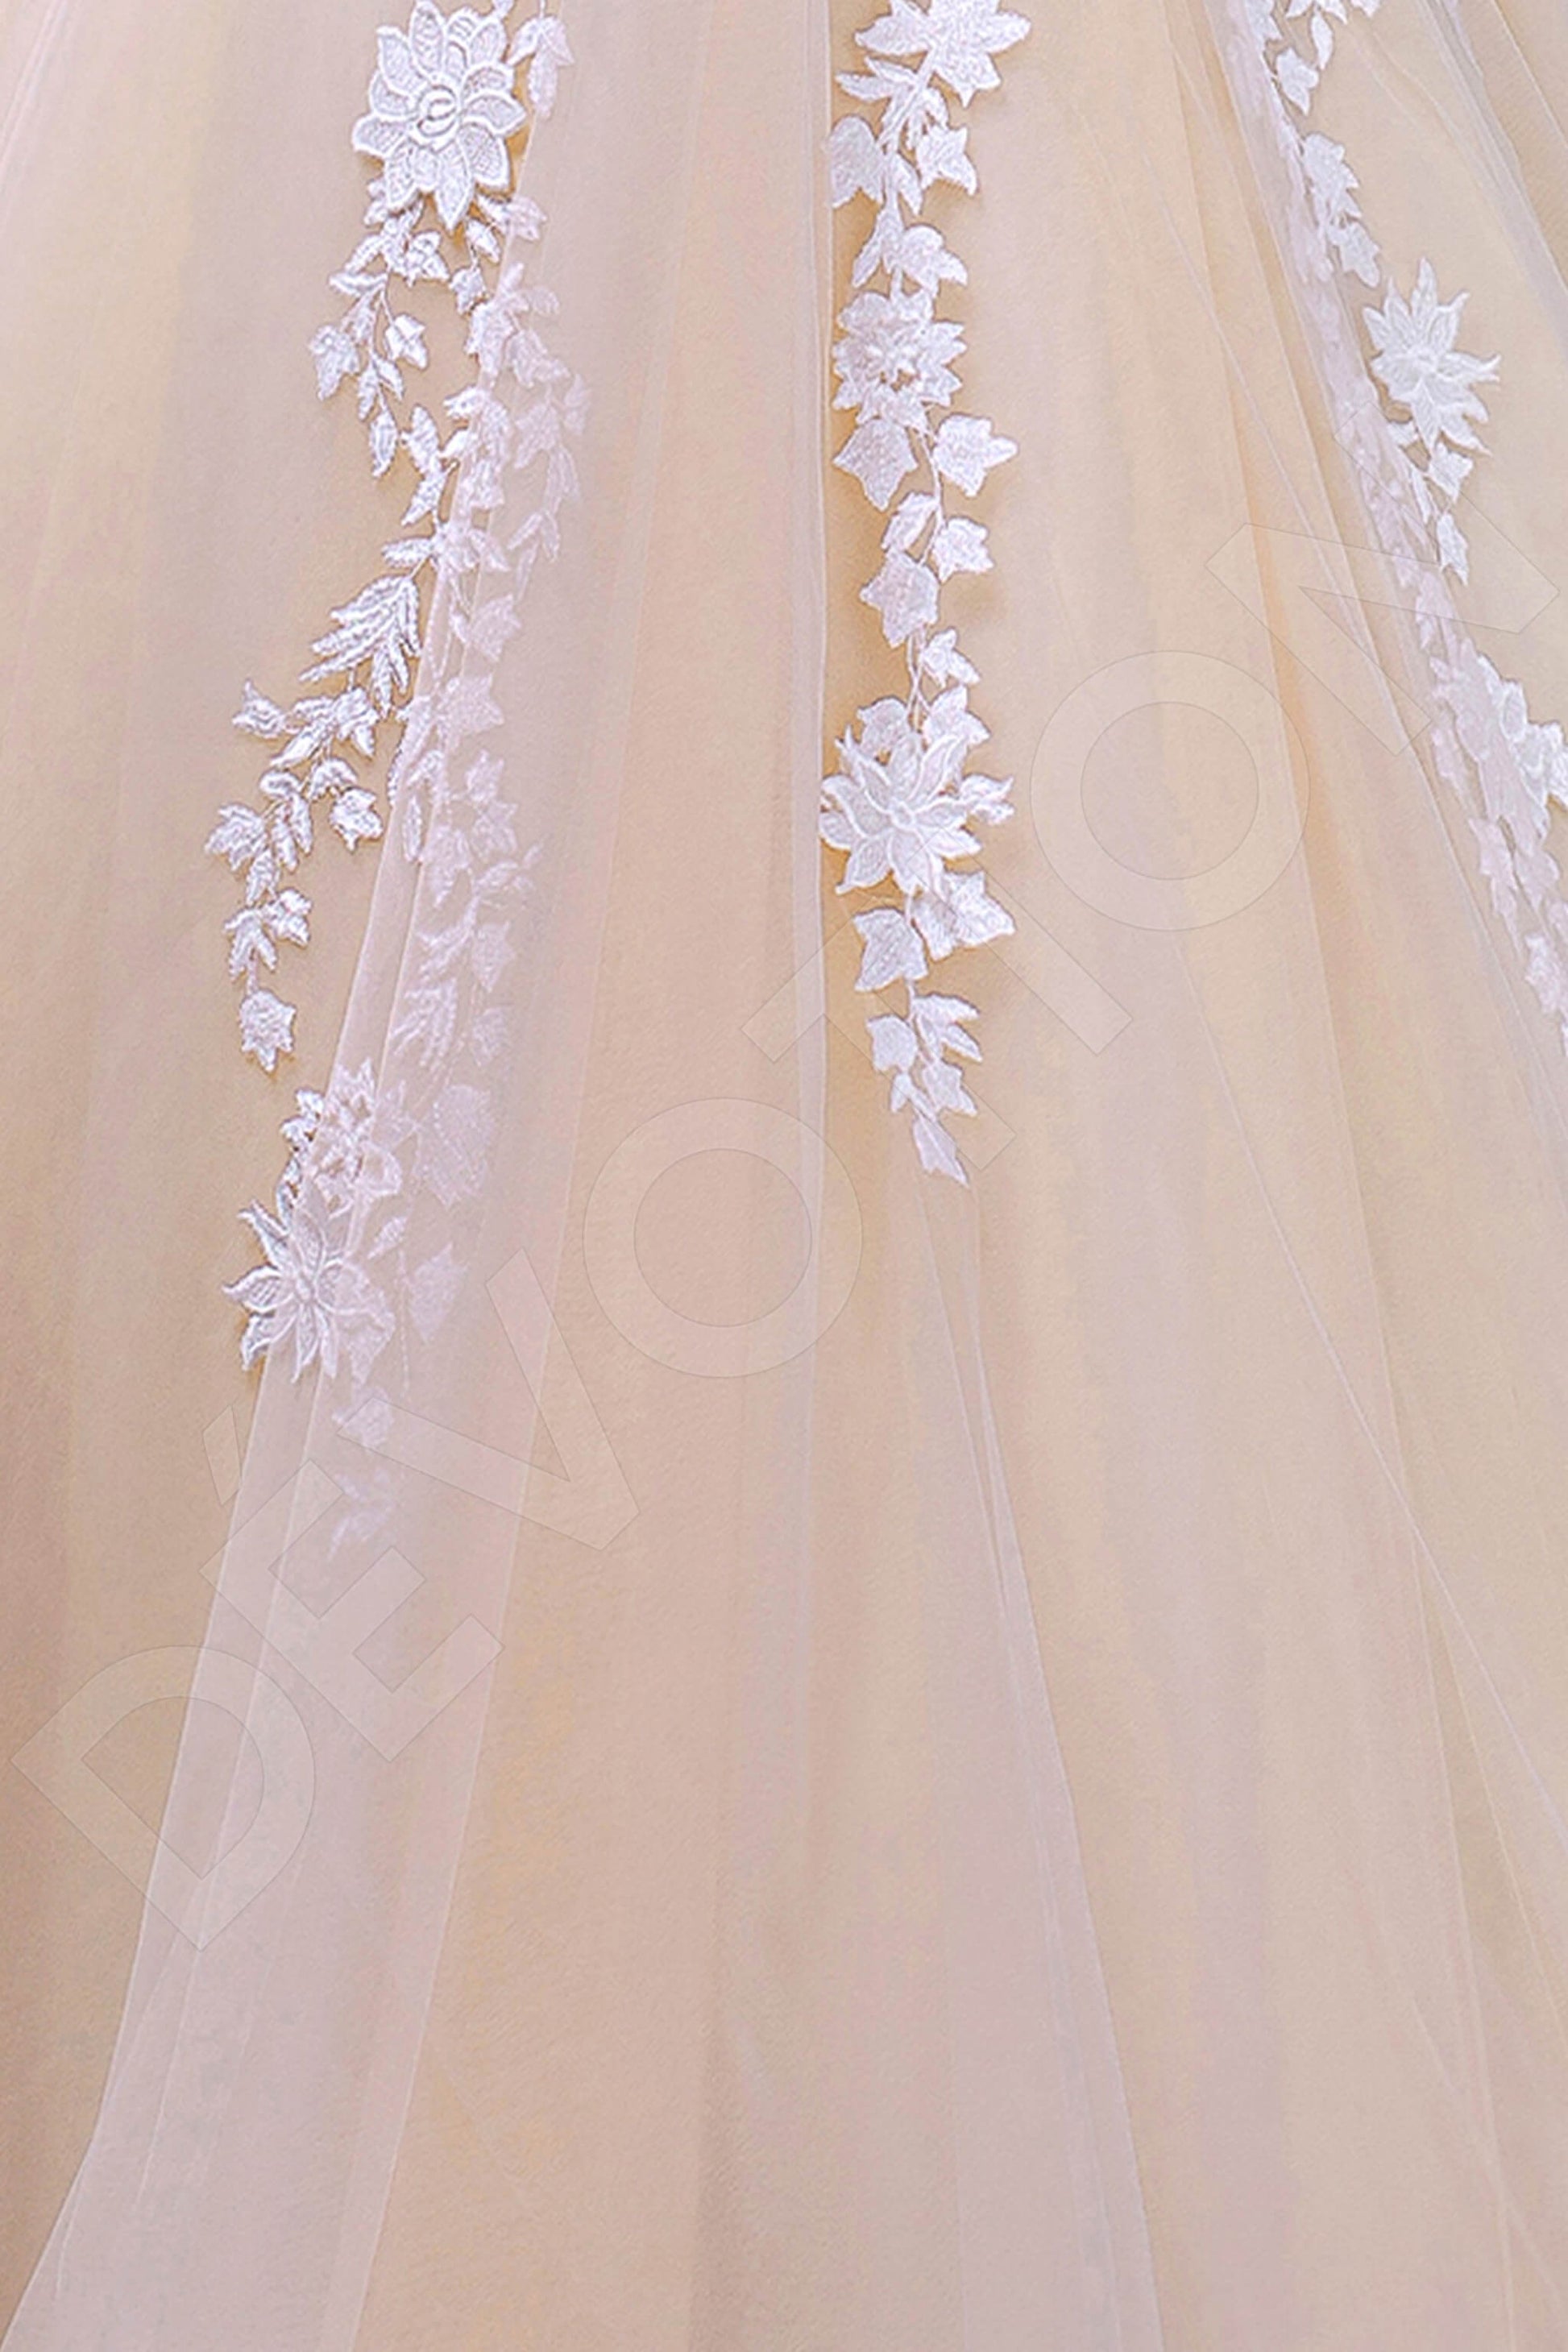 Dalma Princess/Ball Gown Illusion Peach Ivory Wedding dress